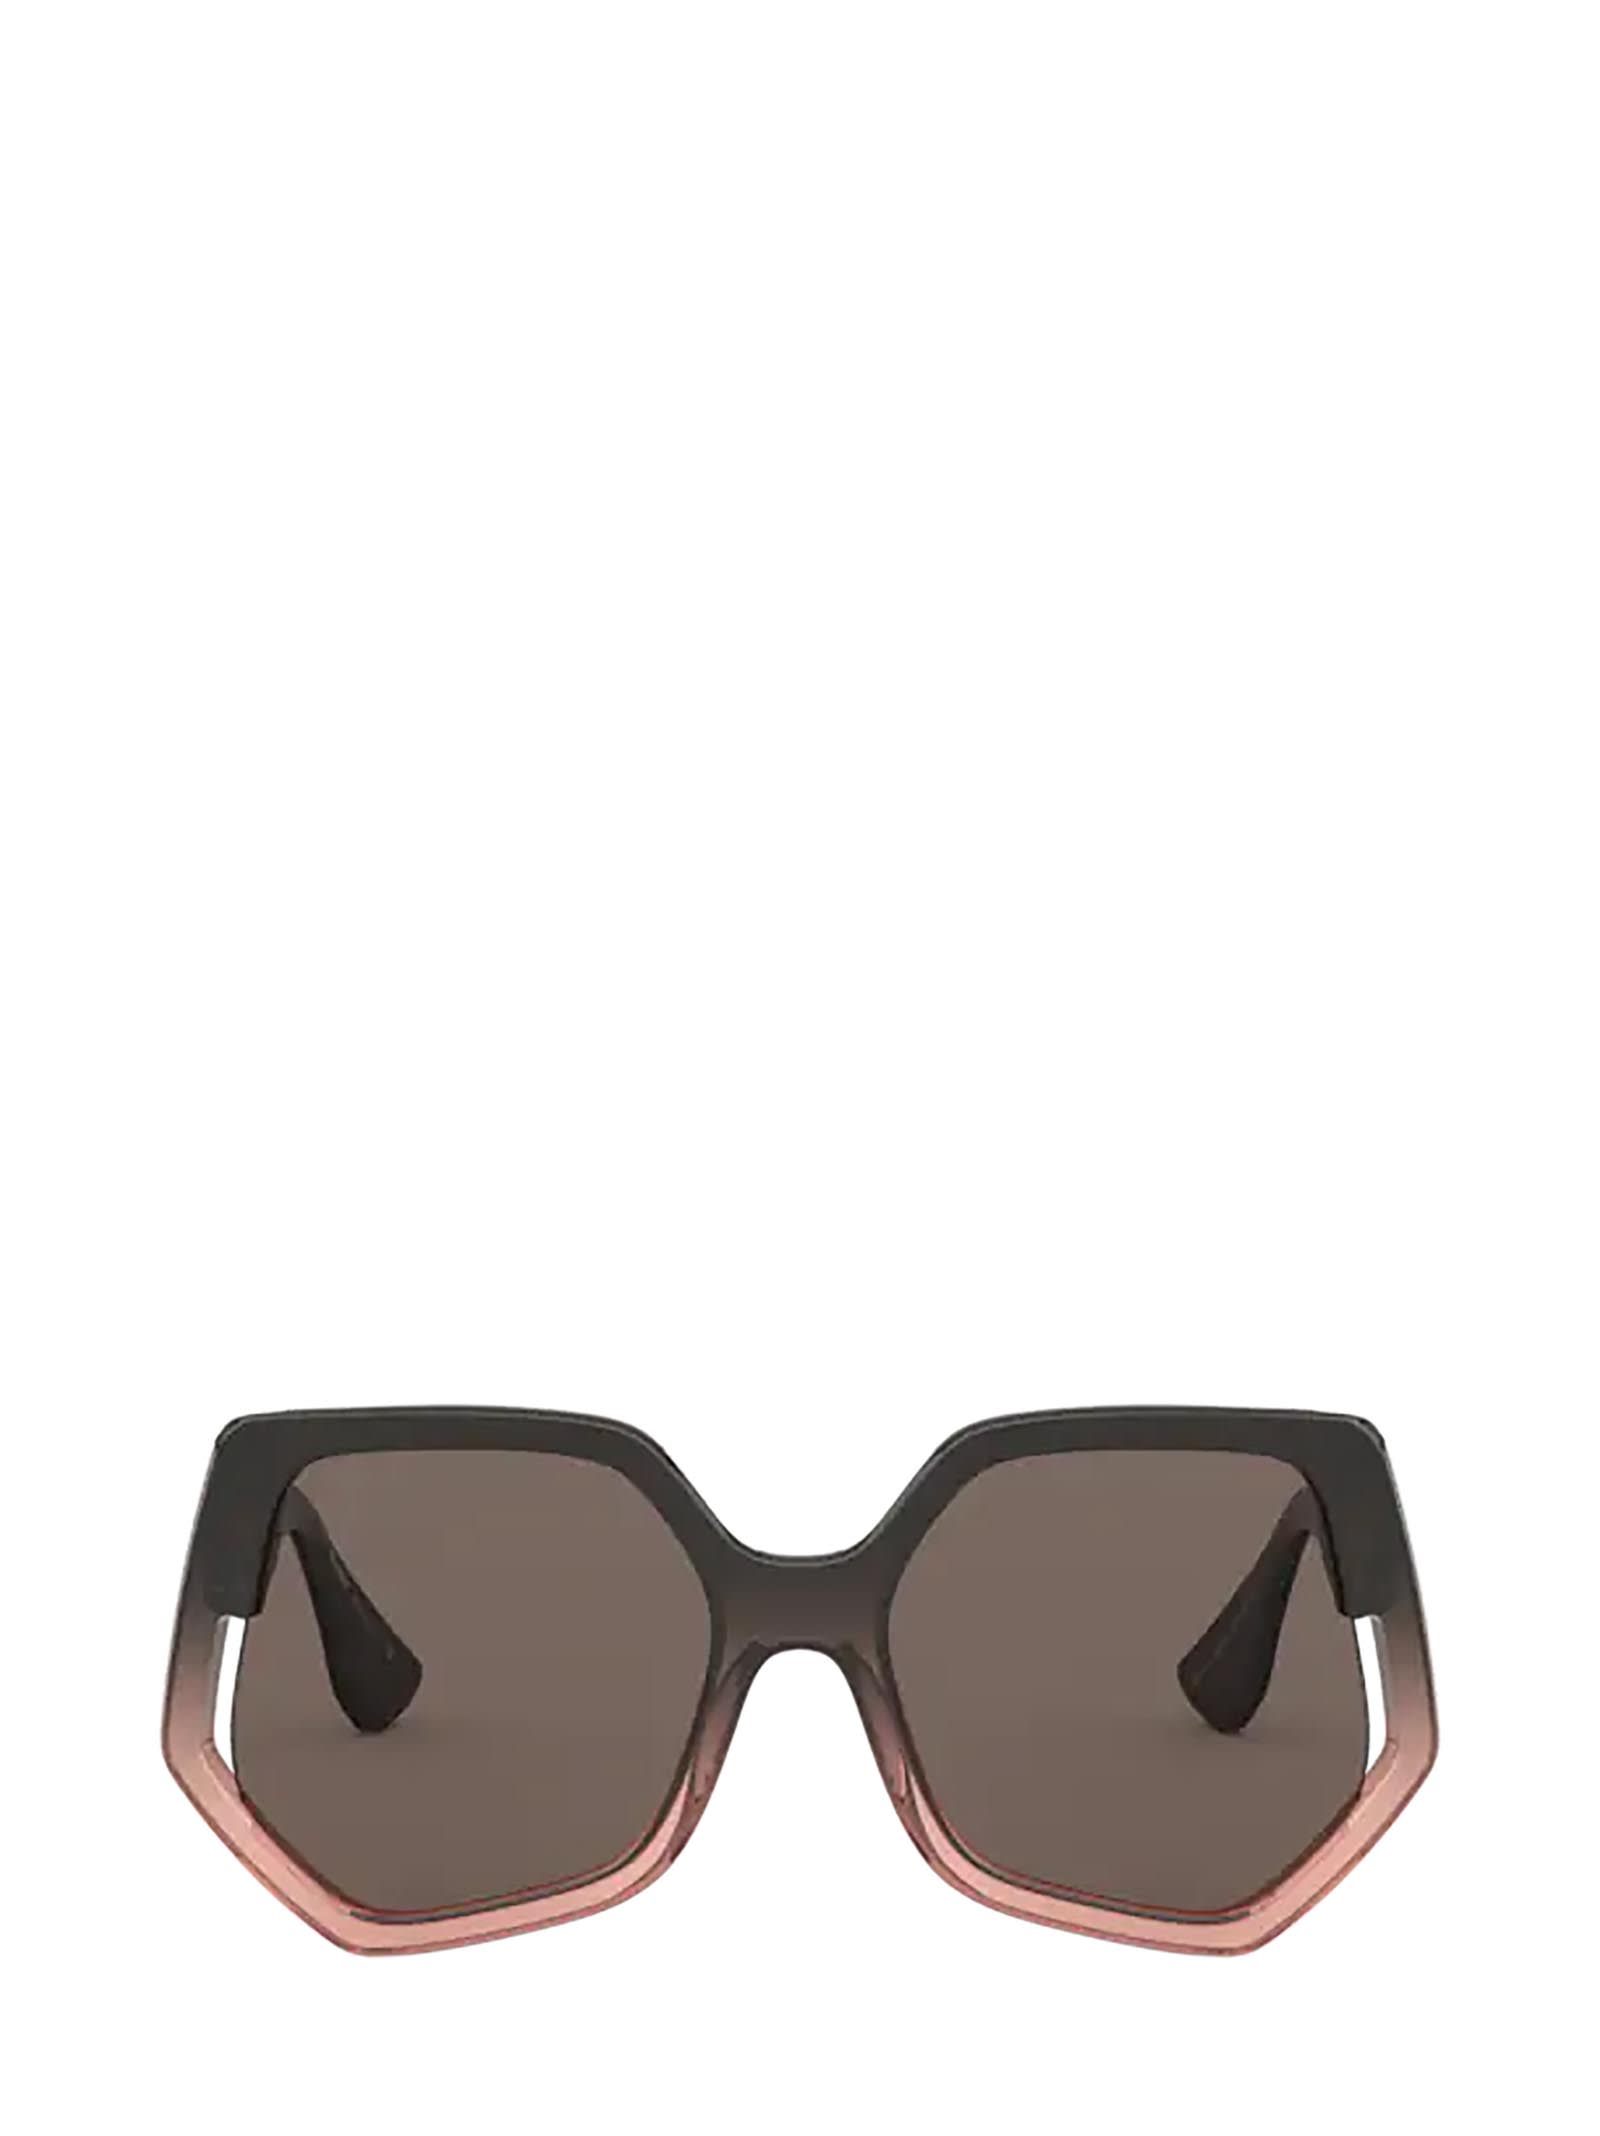 Miu Miu Miu Miu Mu 07vs Brown Gradient Transparent Sunglasses